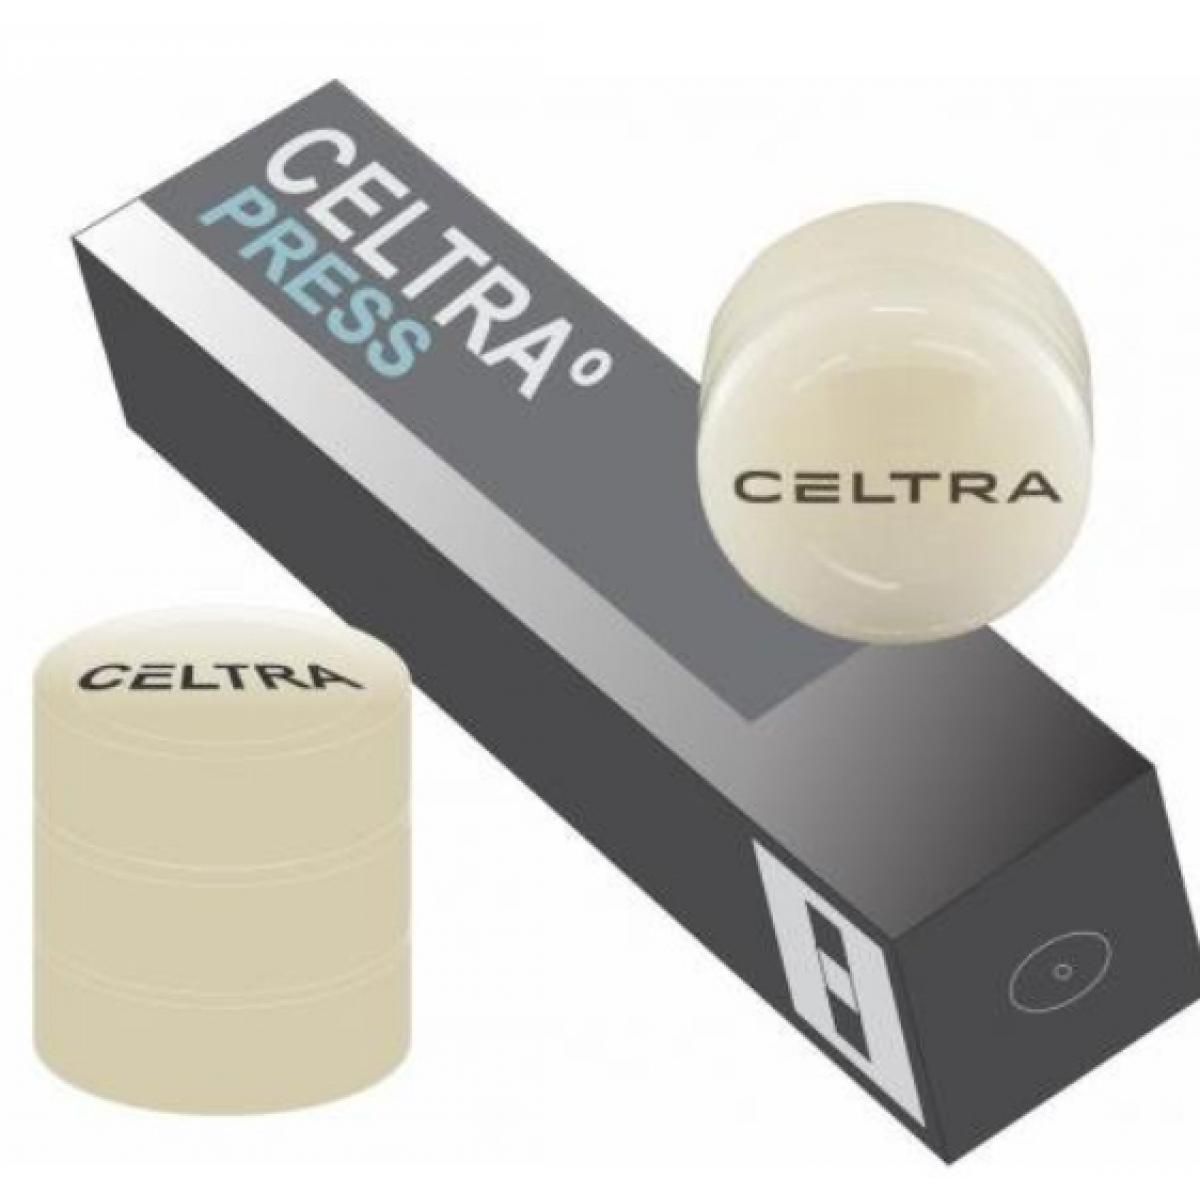 CELTRA PRESS LT B3 3 X 6 GR DENTSPLY -